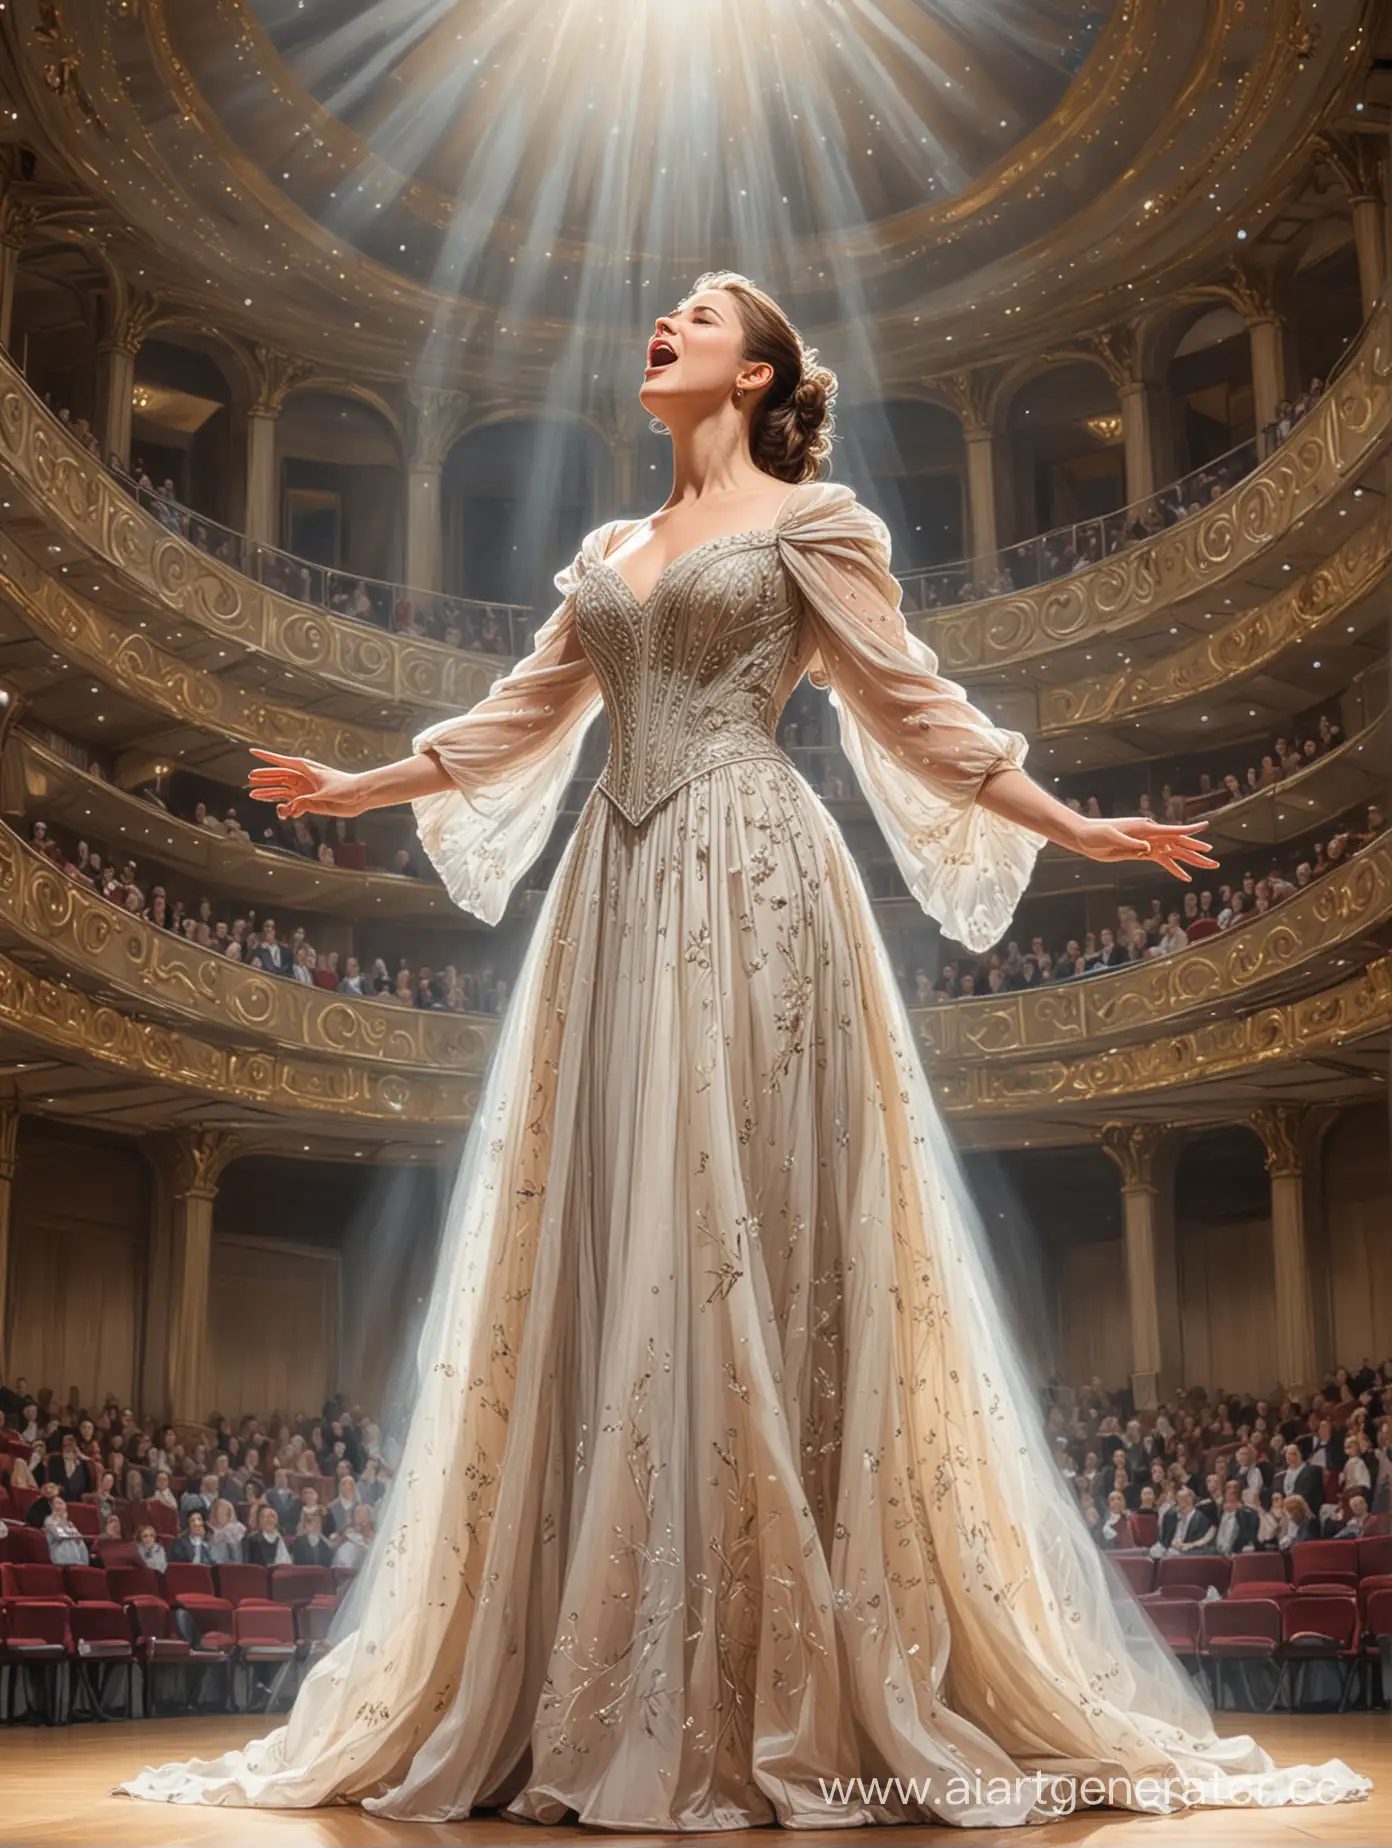 Elegant-Opera-Singer-Performing-High-Notes-at-Royal-Opera-House